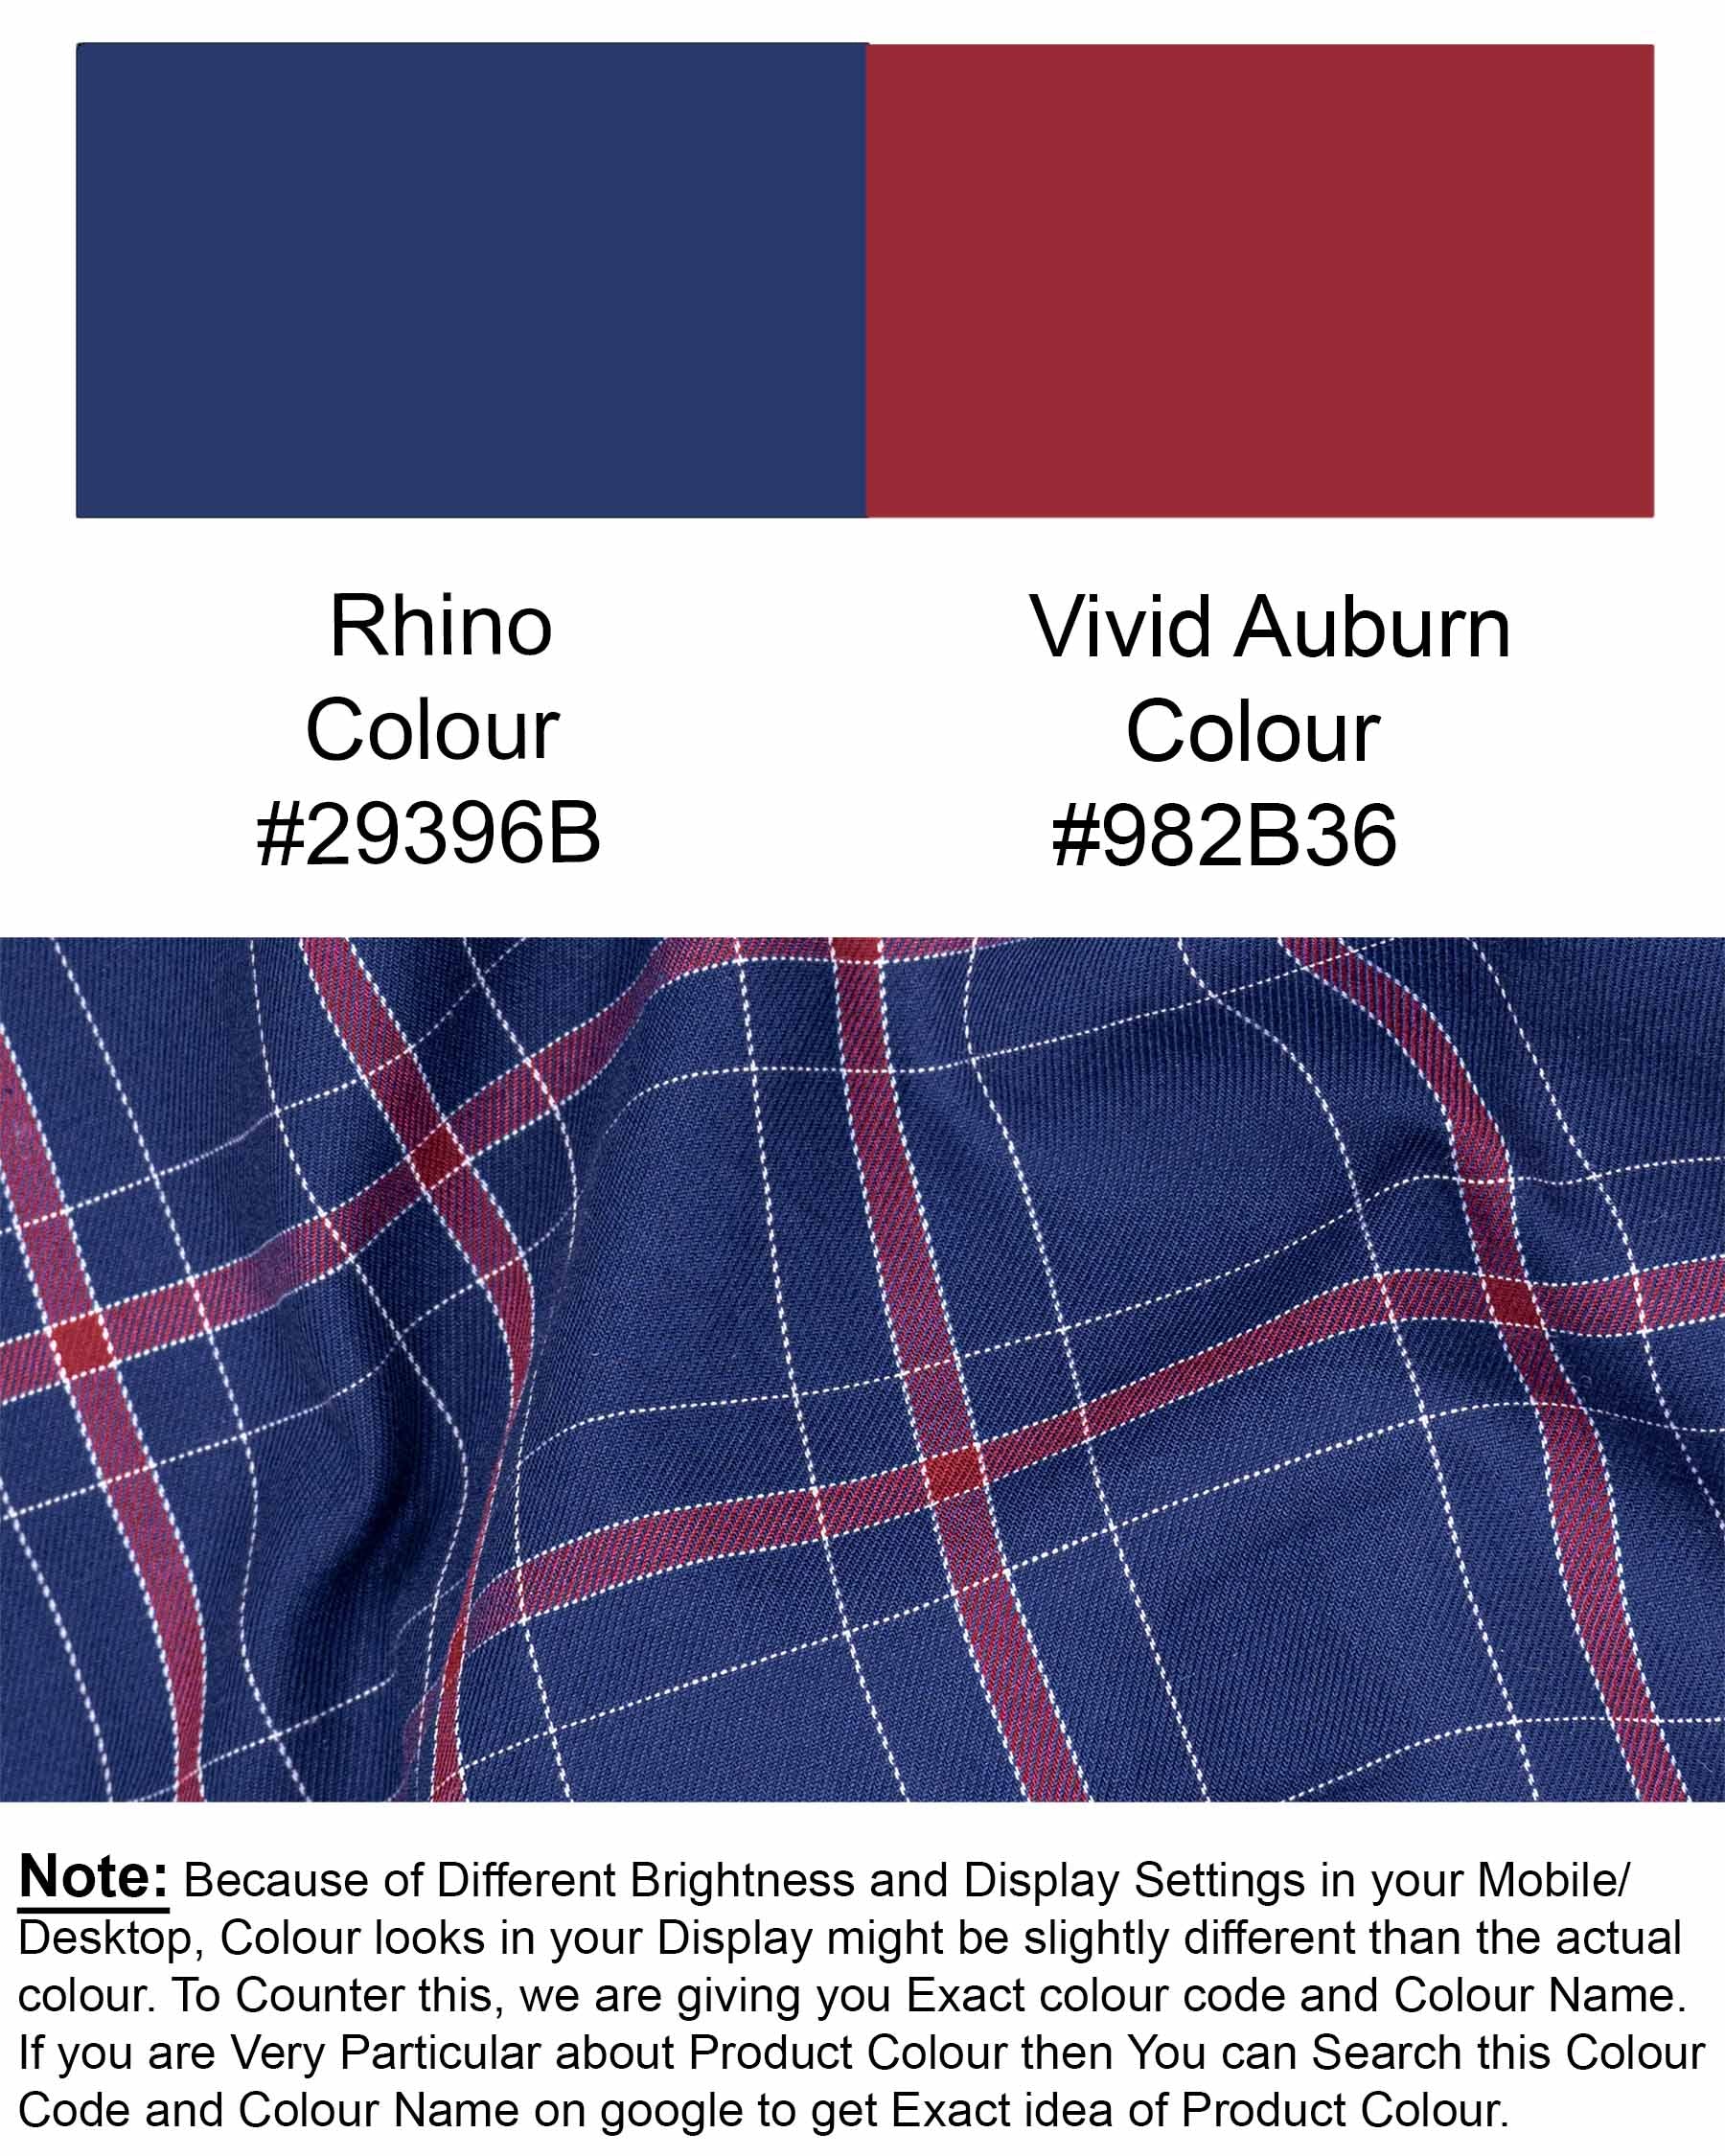 Rhino Blue Windowpane Twill Premium Cotton Shirt 6970-BD-38,6970-BD-H-38,6970-BD-39,6970-BD-H-39,6970-BD-40,6970-BD-H-40,6970-BD-42,6970-BD-H-42,6970-BD-44,6970-BD-H-44,6970-BD-46,6970-BD-H-46,6970-BD-48,6970-BD-H-48,6970-BD-50,6970-BD-H-50,6970-BD-52,6970-BD-H-52